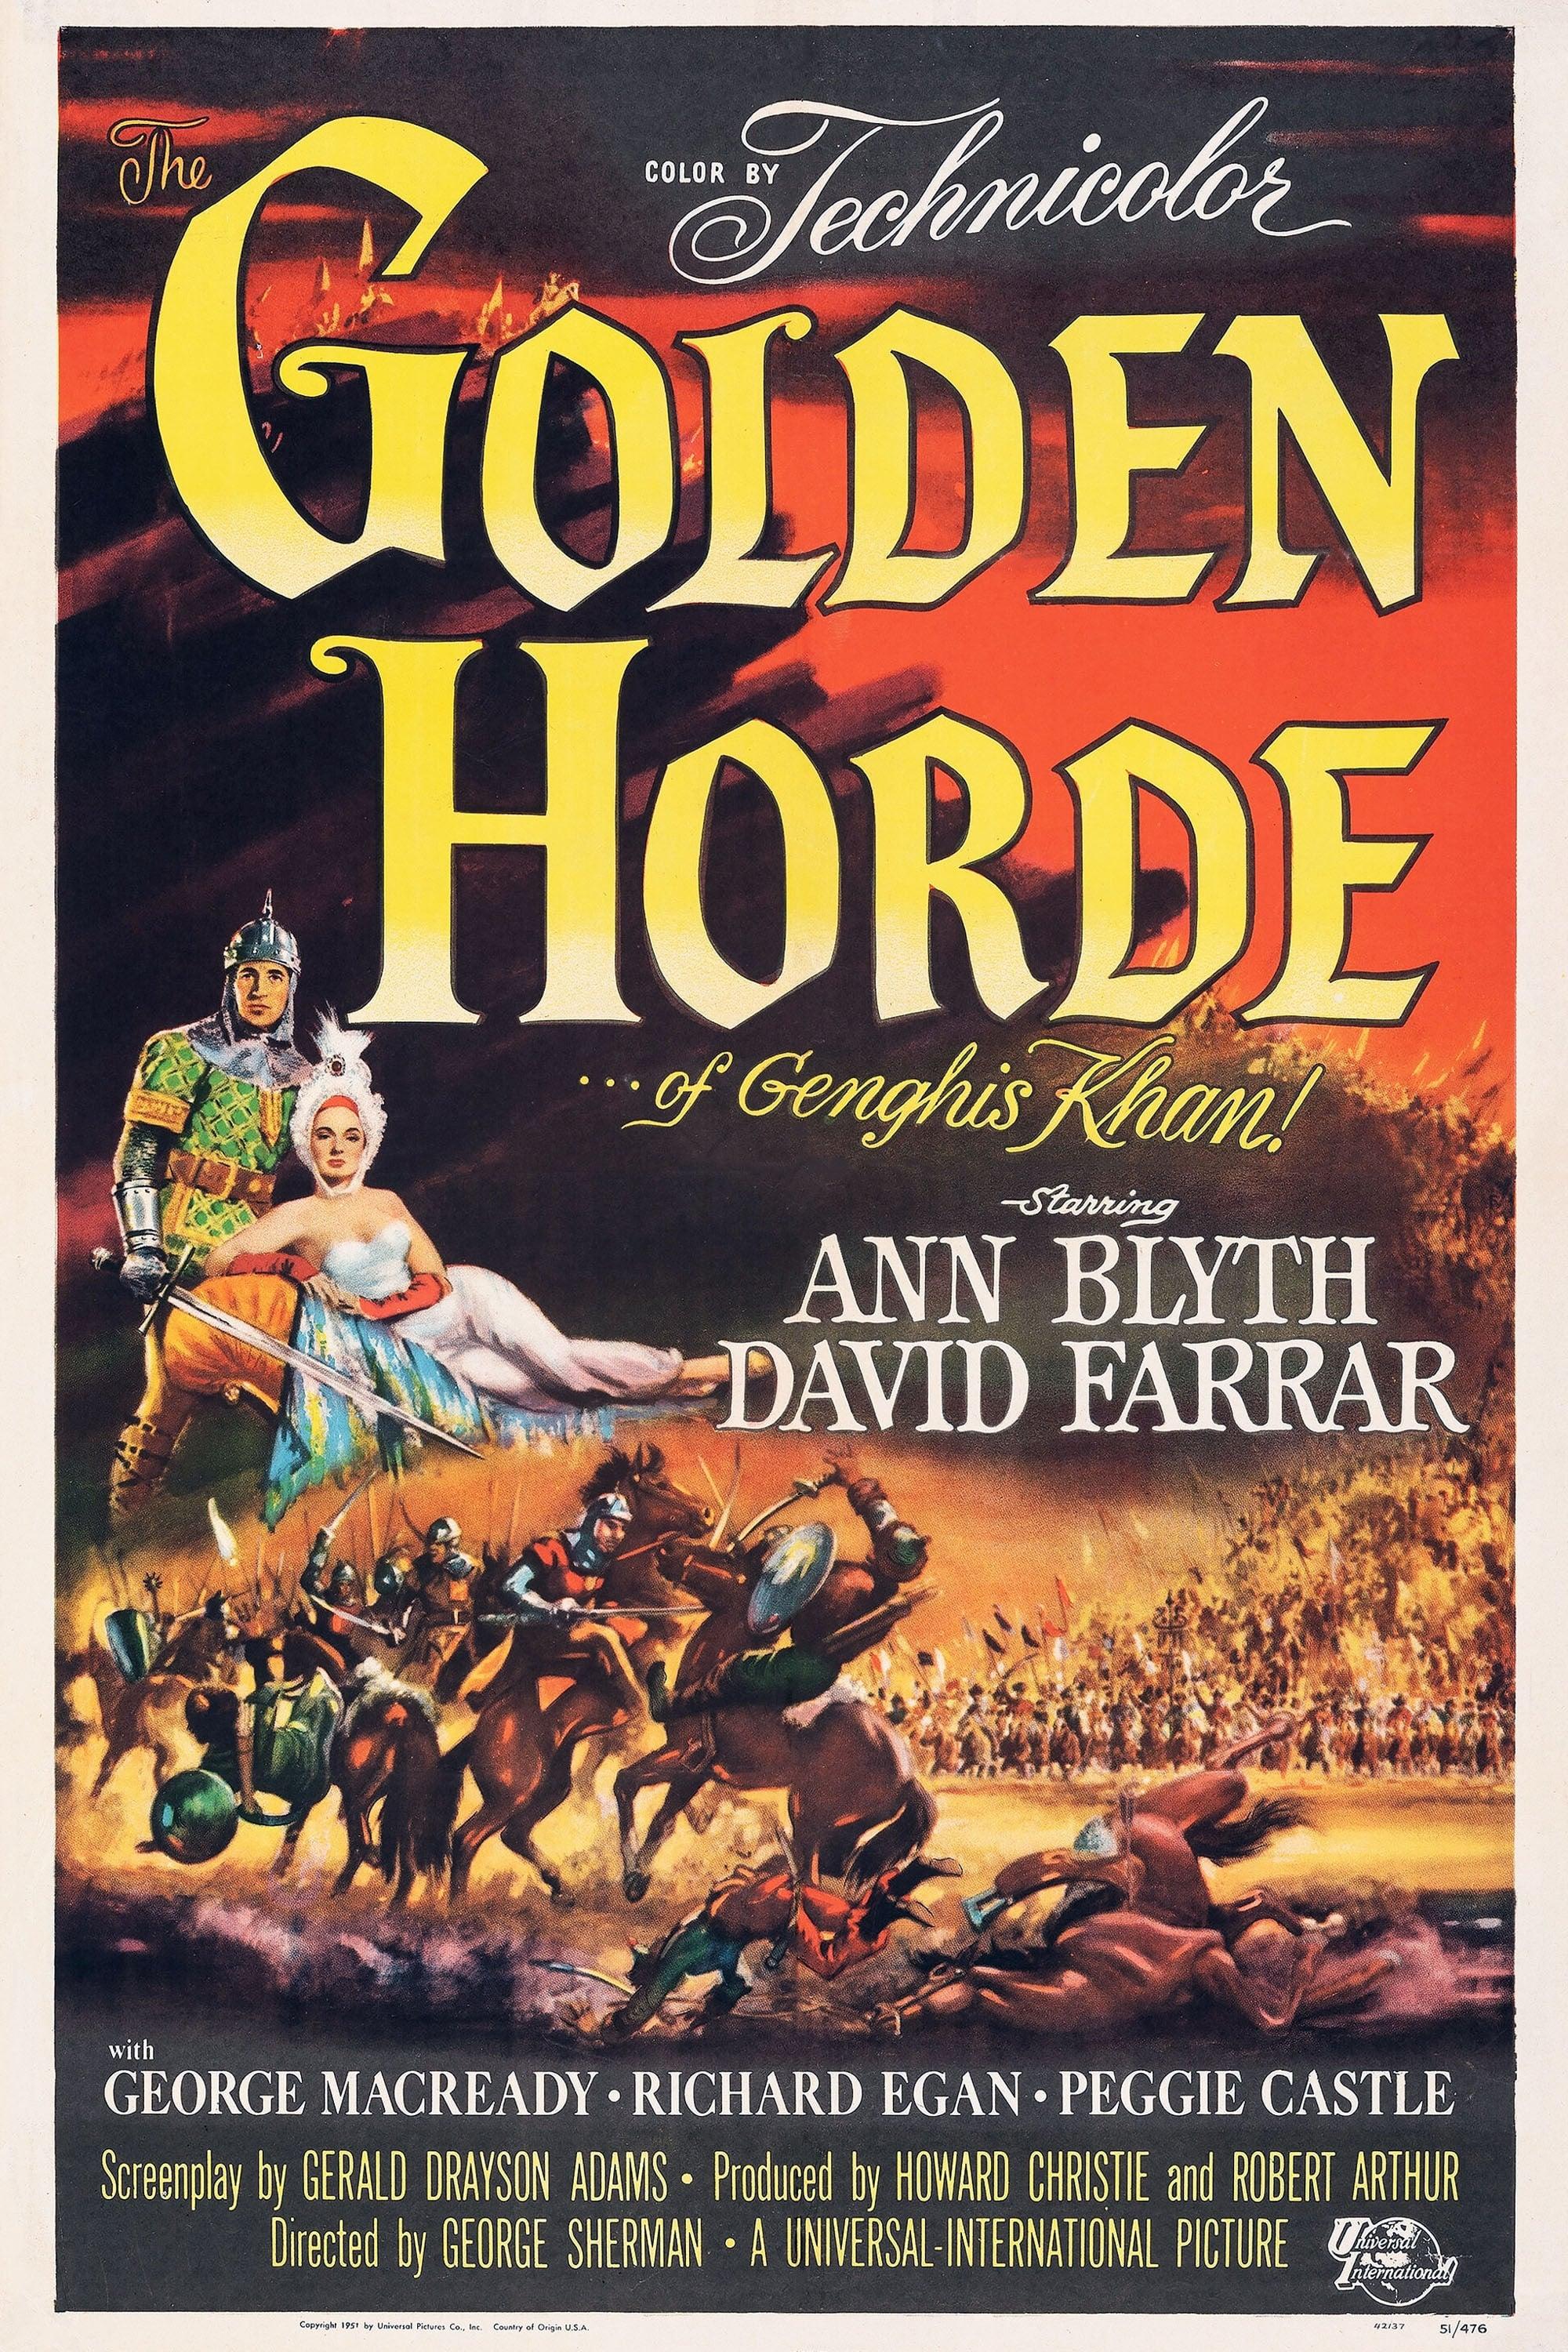 The Golden Horde poster